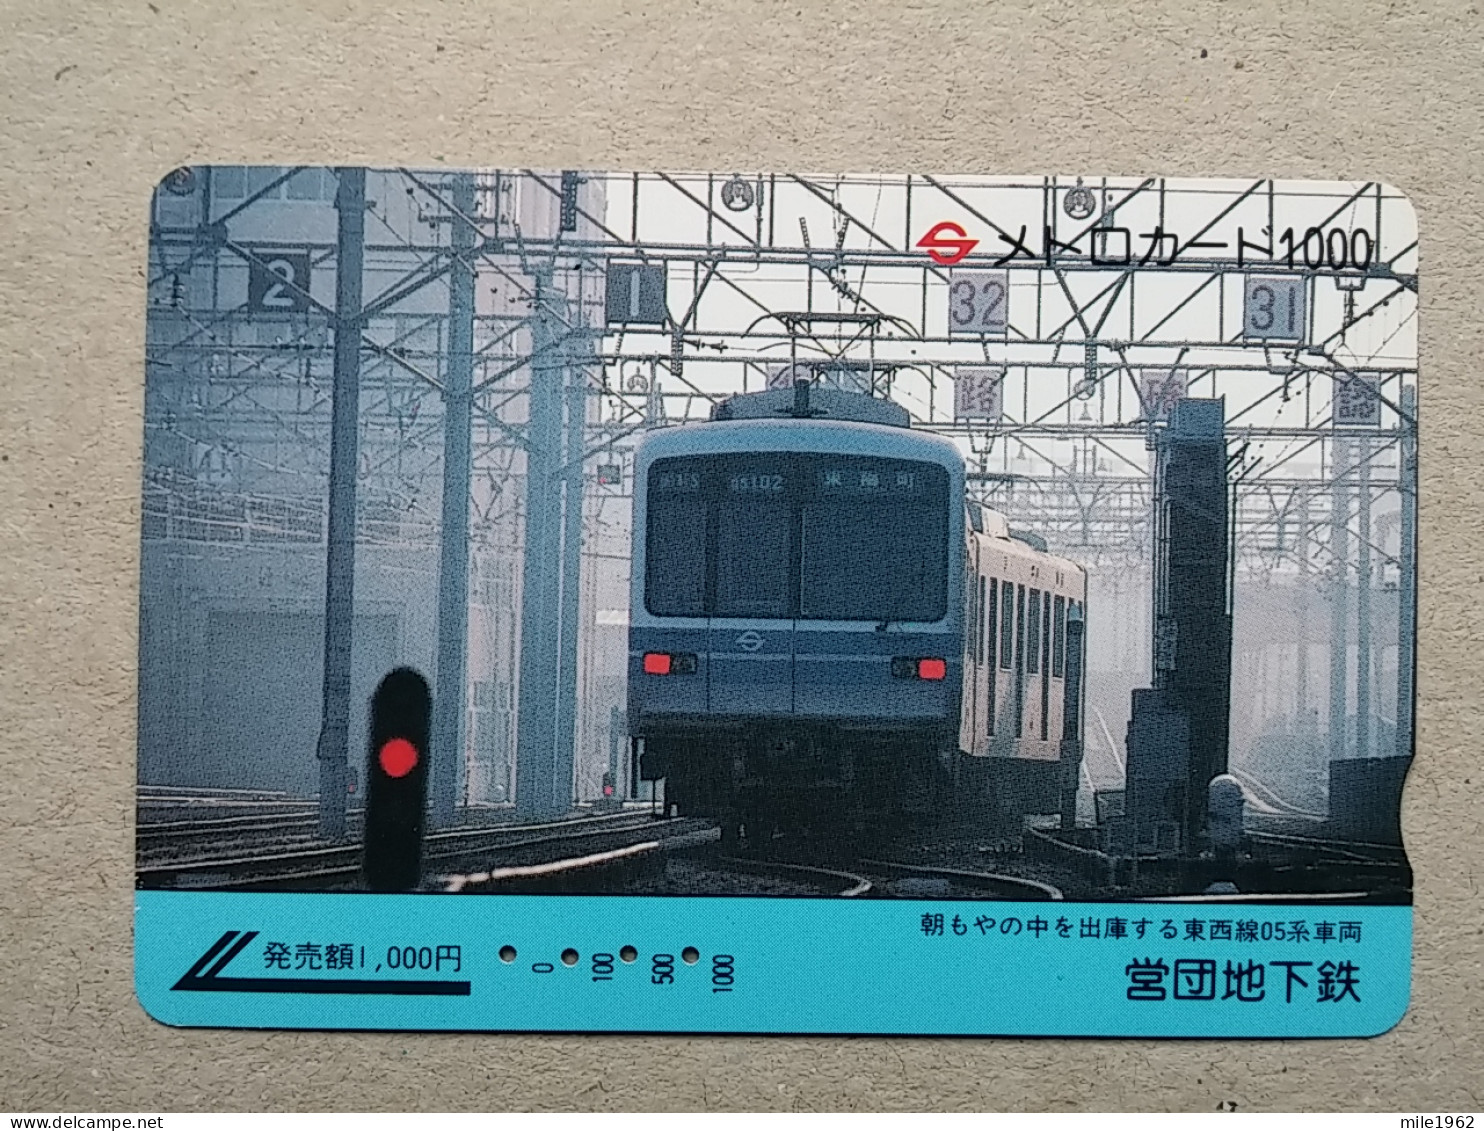 T-607 - JAPAN, Japon, Nipon, Carte Prepayee, Prepaid Card, CARD, RAILWAY, TRAIN, CHEMIN DE FER - Treni